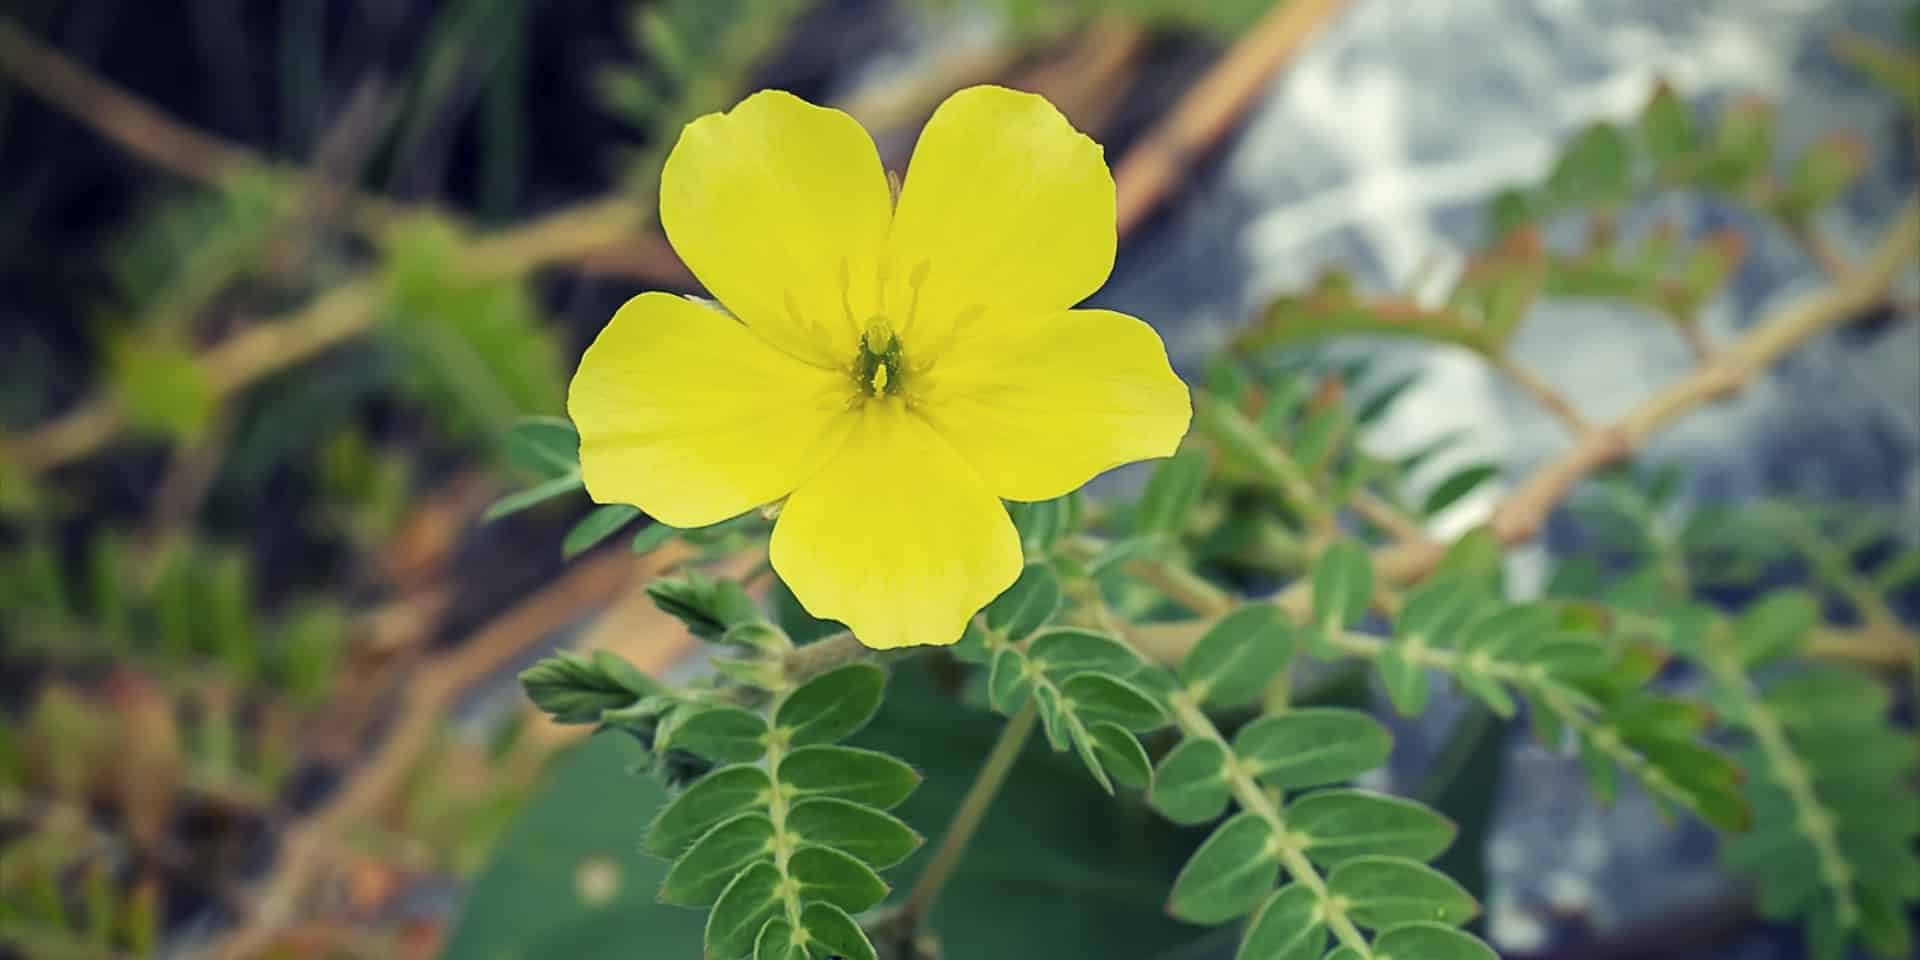 Tribulus Pro the yellow flower of devils thorn (Tribulus Terrestris plant) with leaves